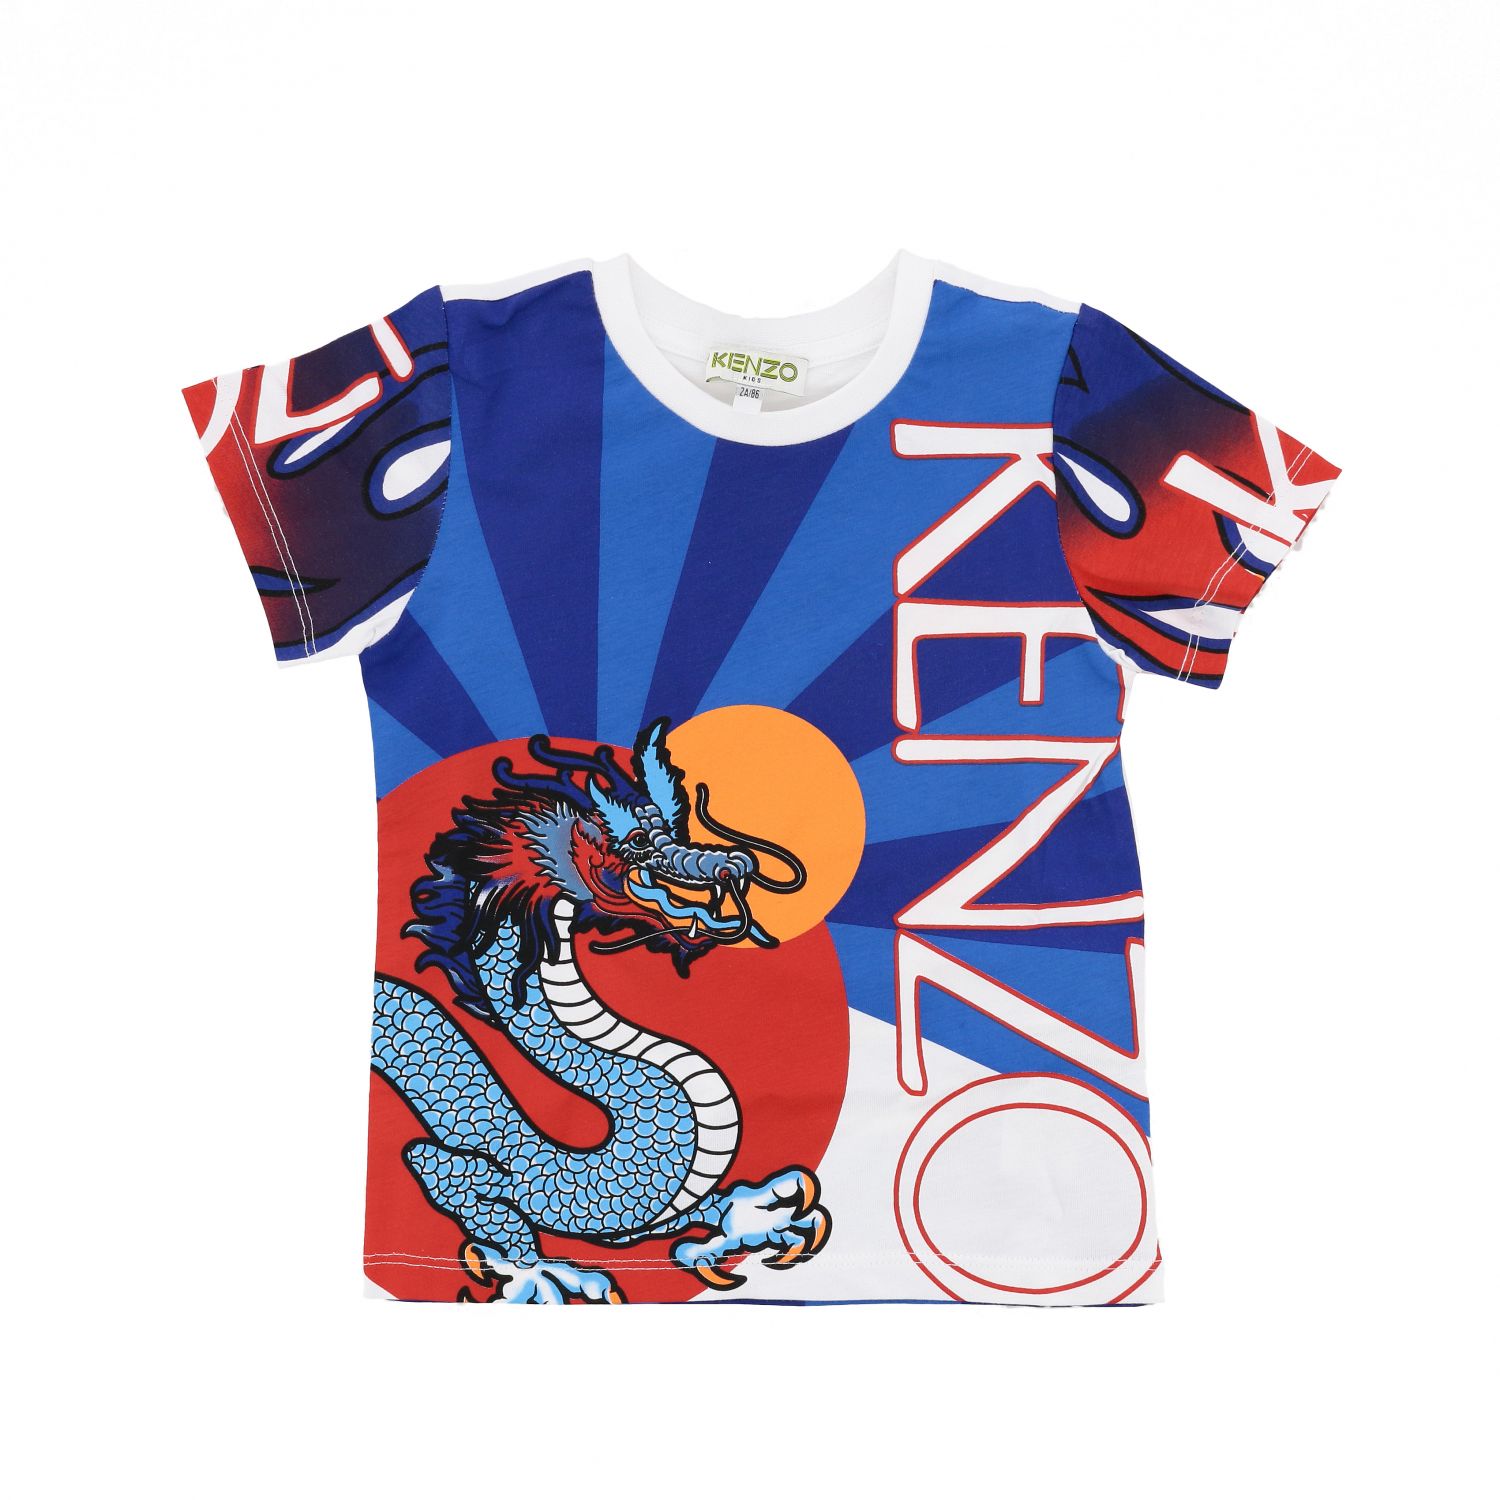 kenzo t shirt dragon